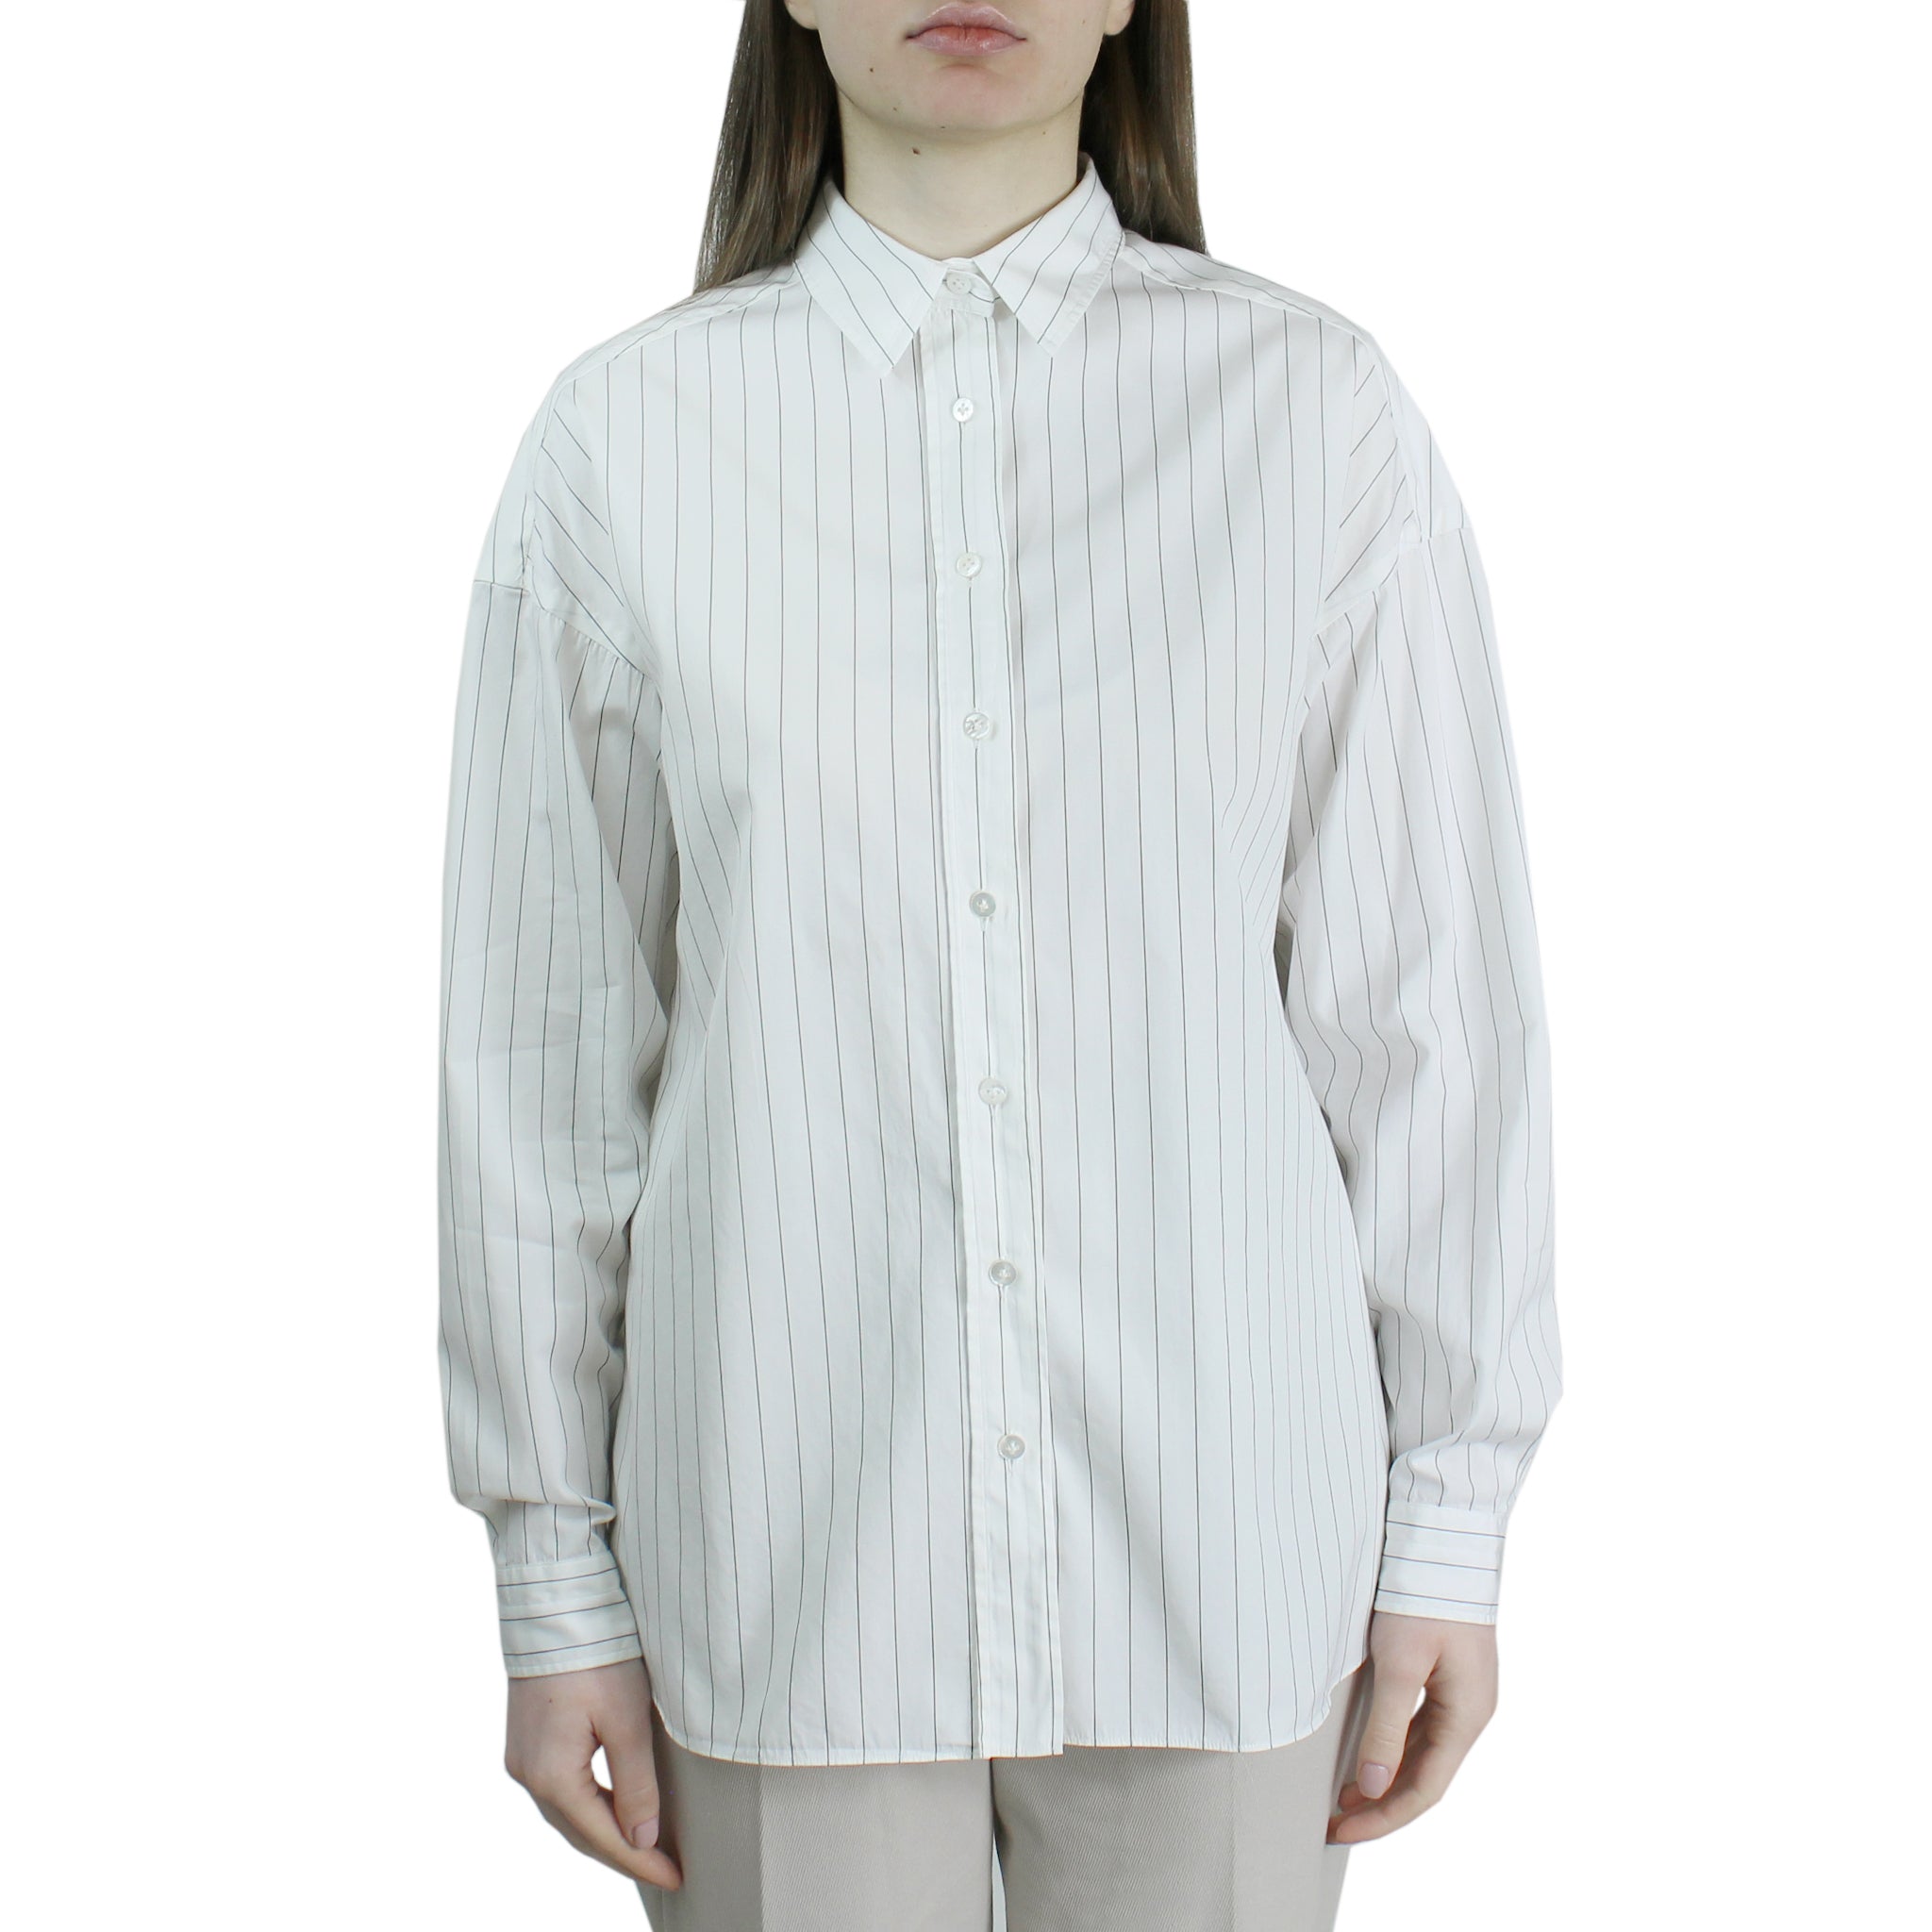 Women's white shirt with black stripes regular fit